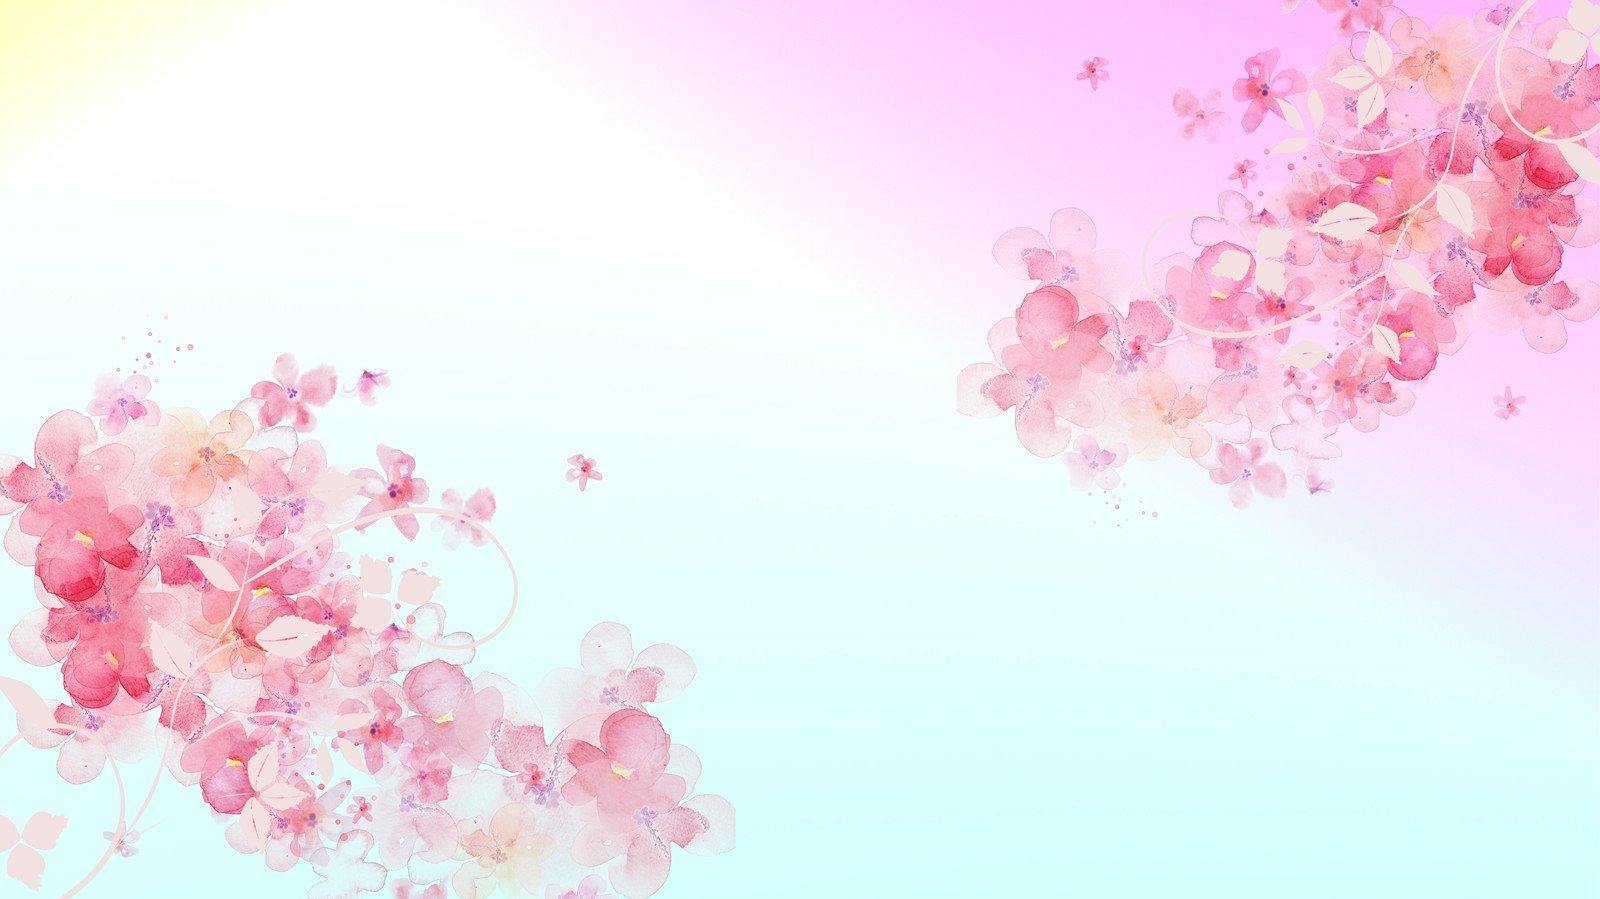 And Customizable Floral Desktop Wallpaper Templates